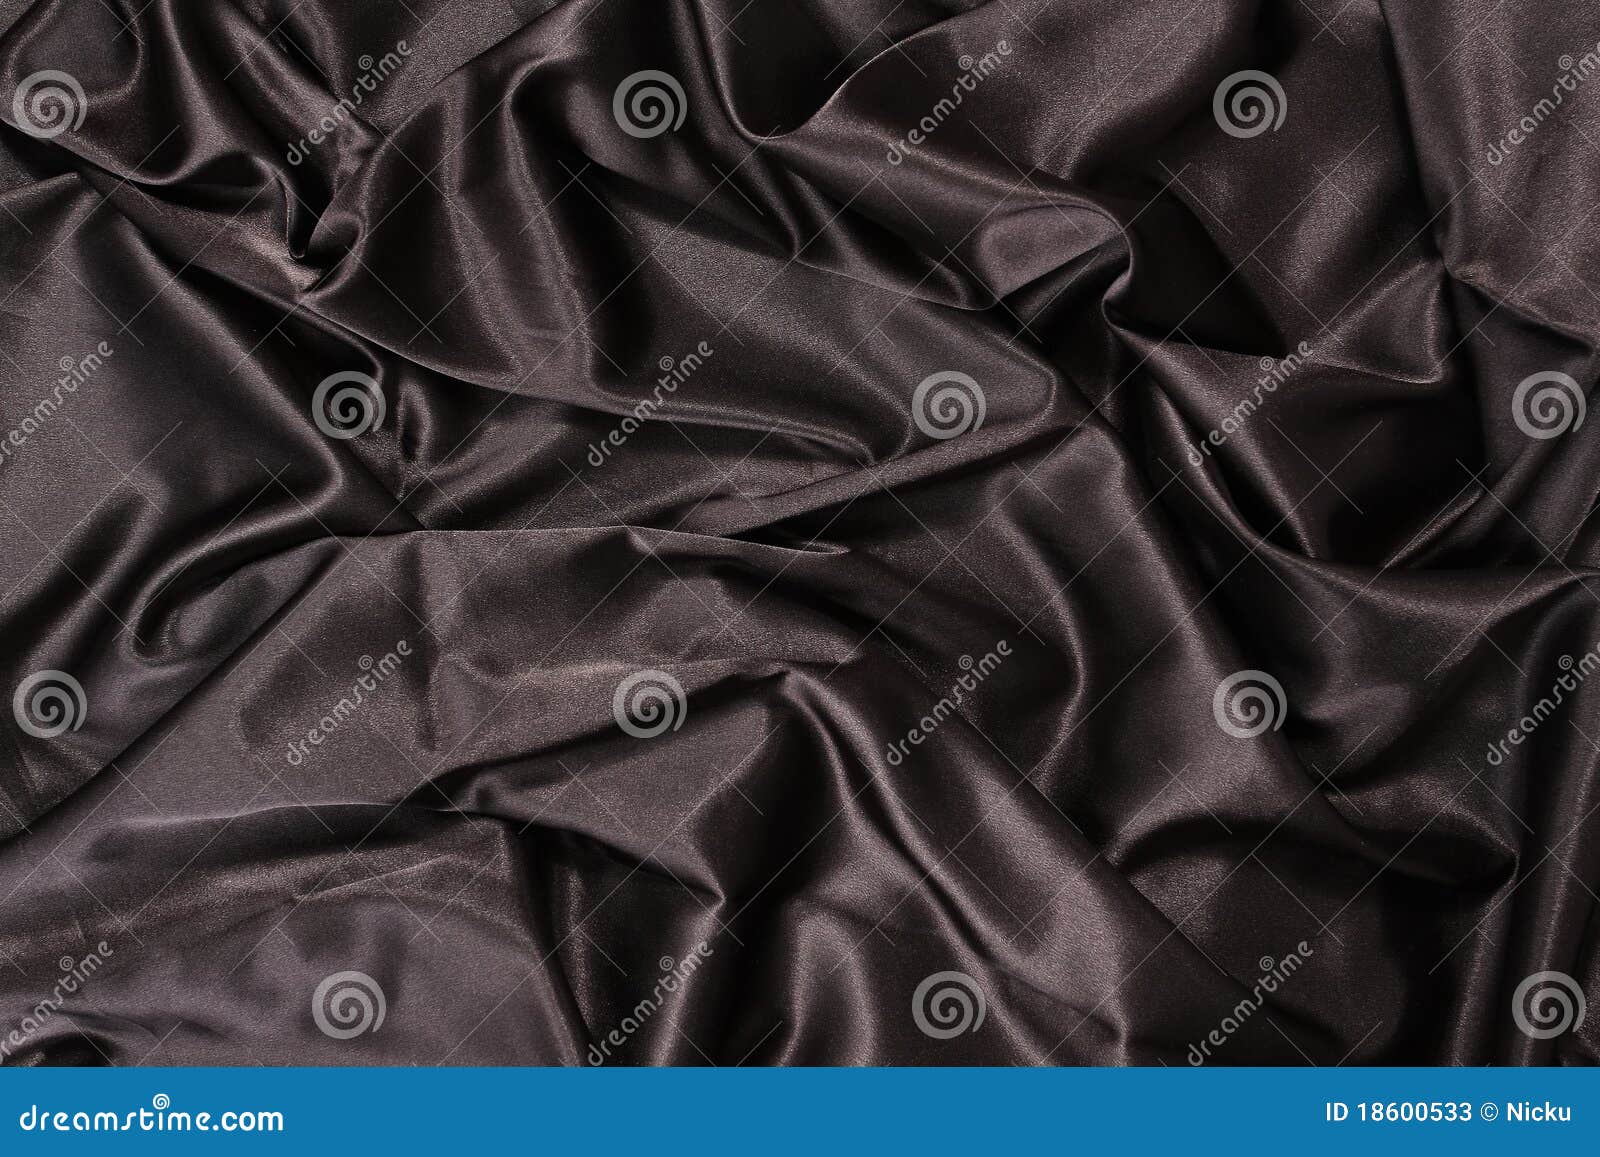 black silk